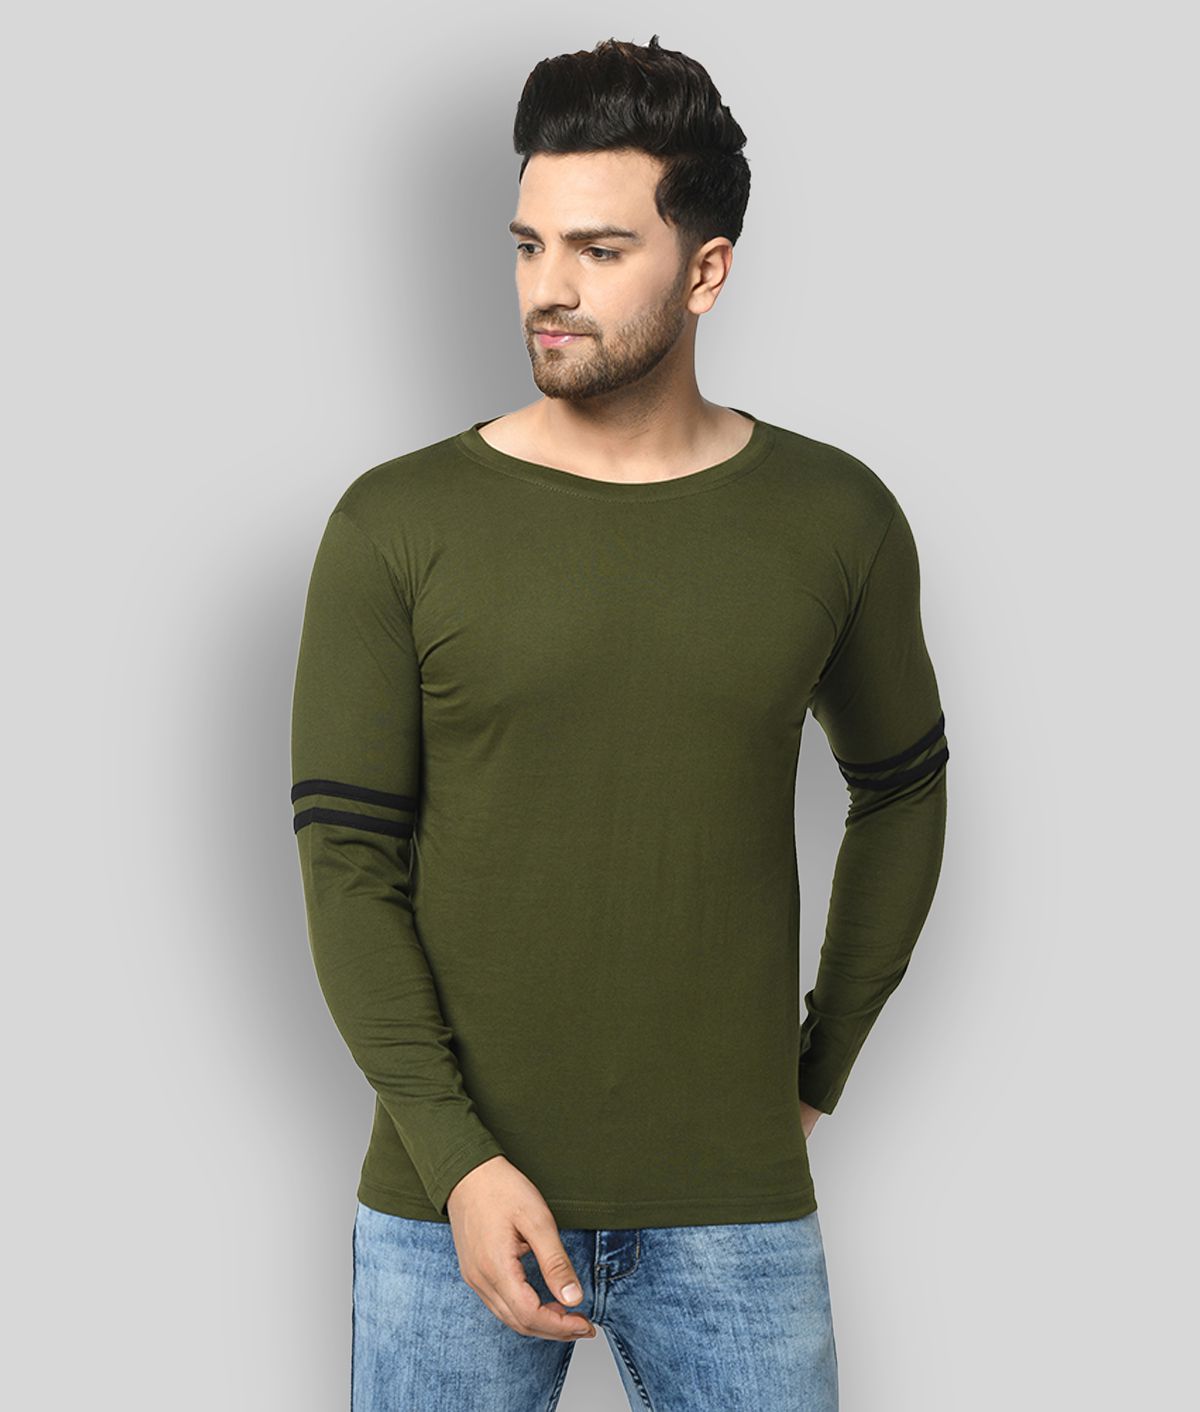     			SIDKRT - Multicolor Cotton Regular Fit Men's T-Shirt ( Pack of 1 )